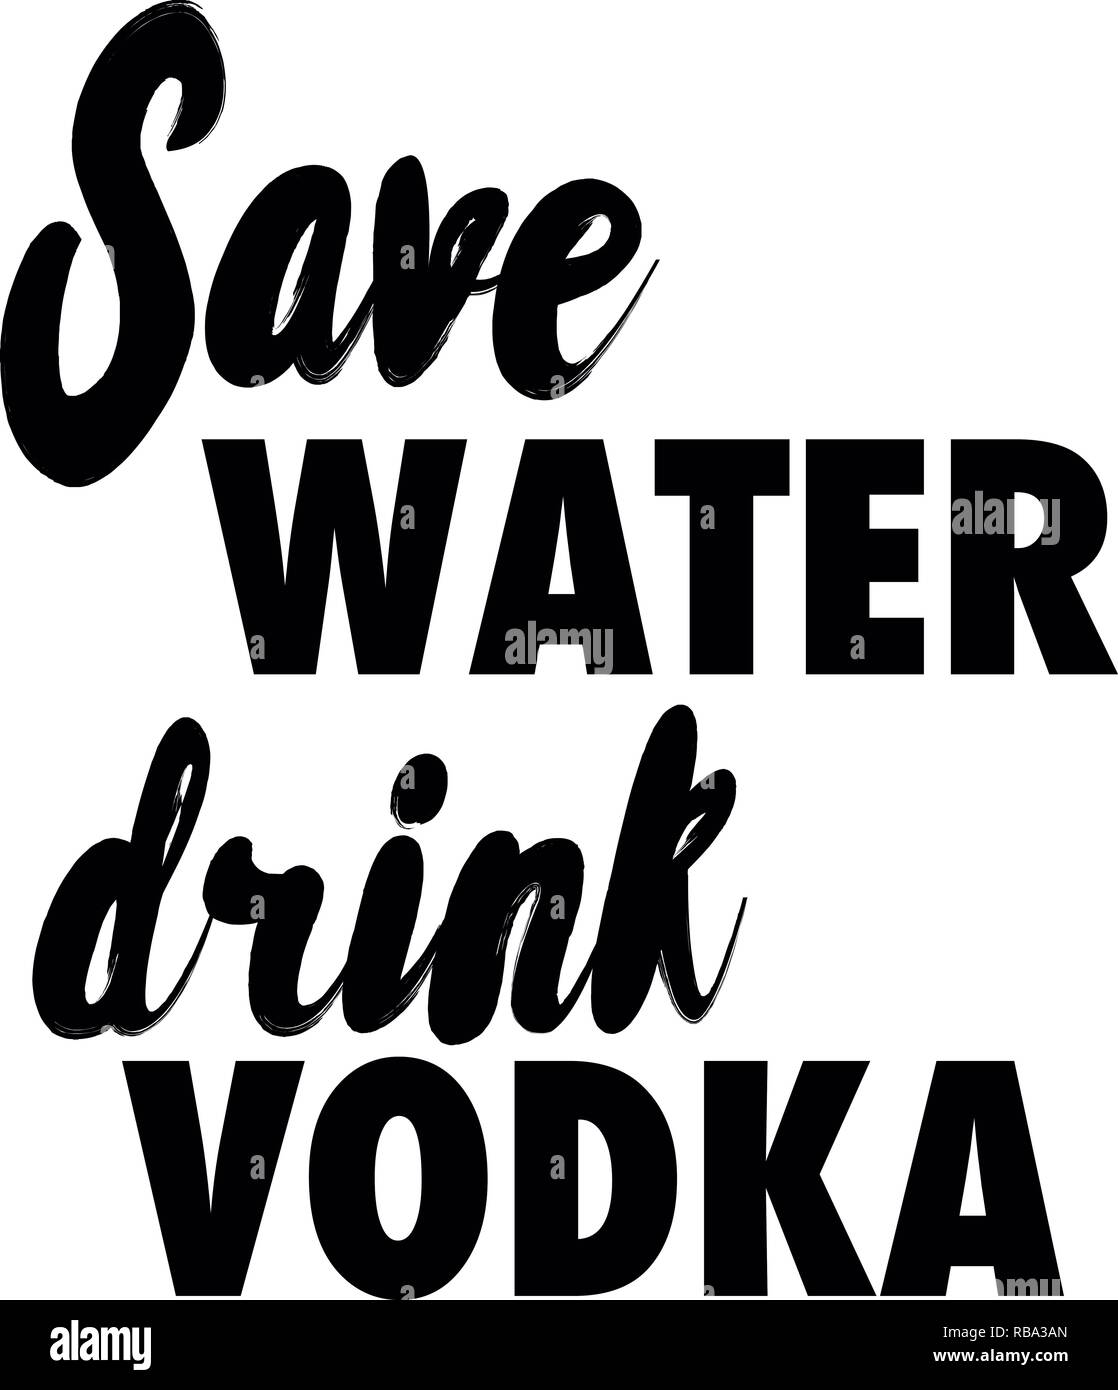 Save water drink vodka slogan Stock Photo